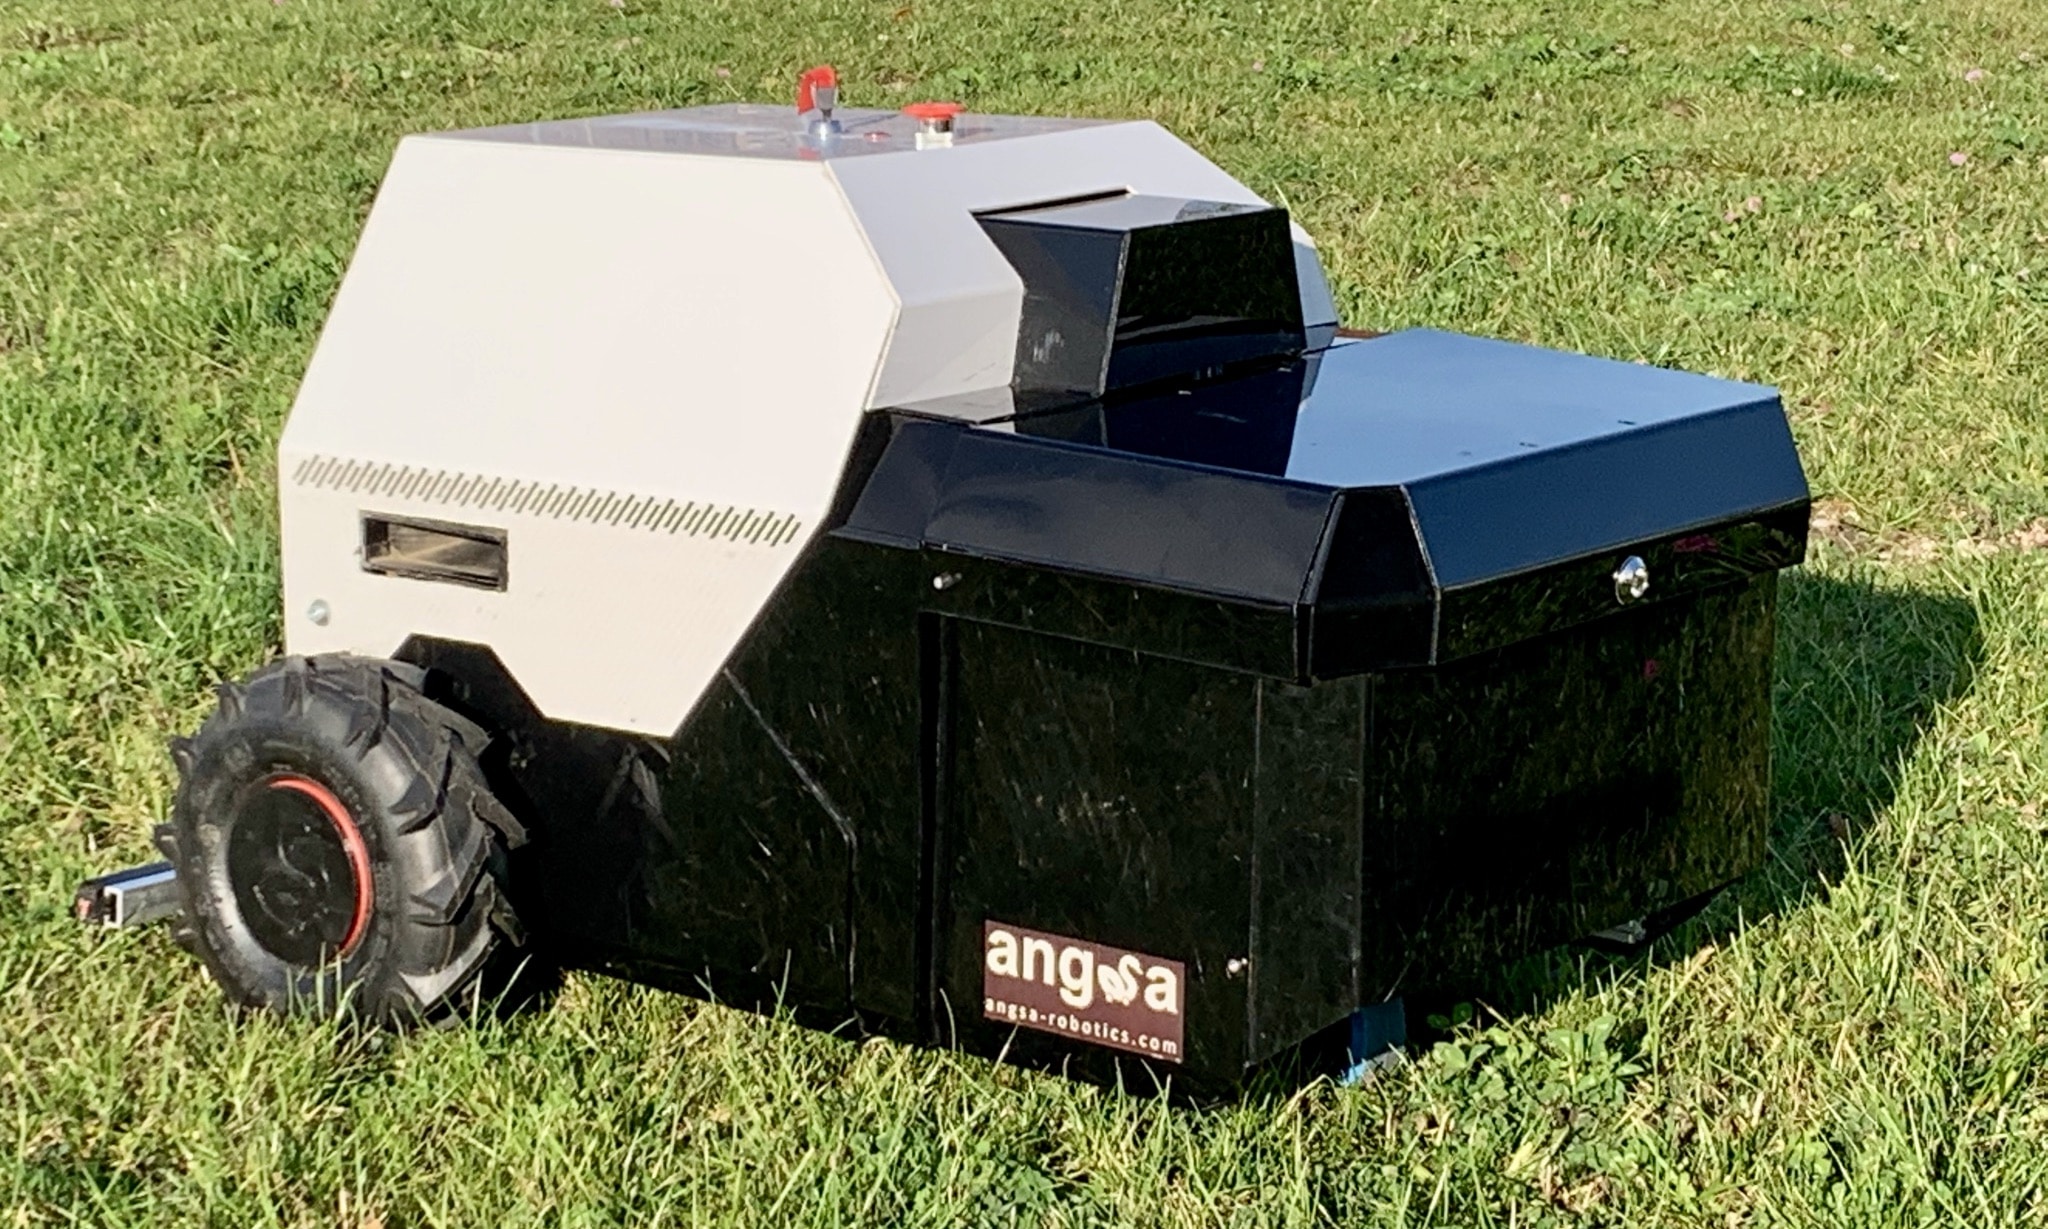 Foto von dem dritten Prototypen, Clive, des StartUps Angsa-Robotics